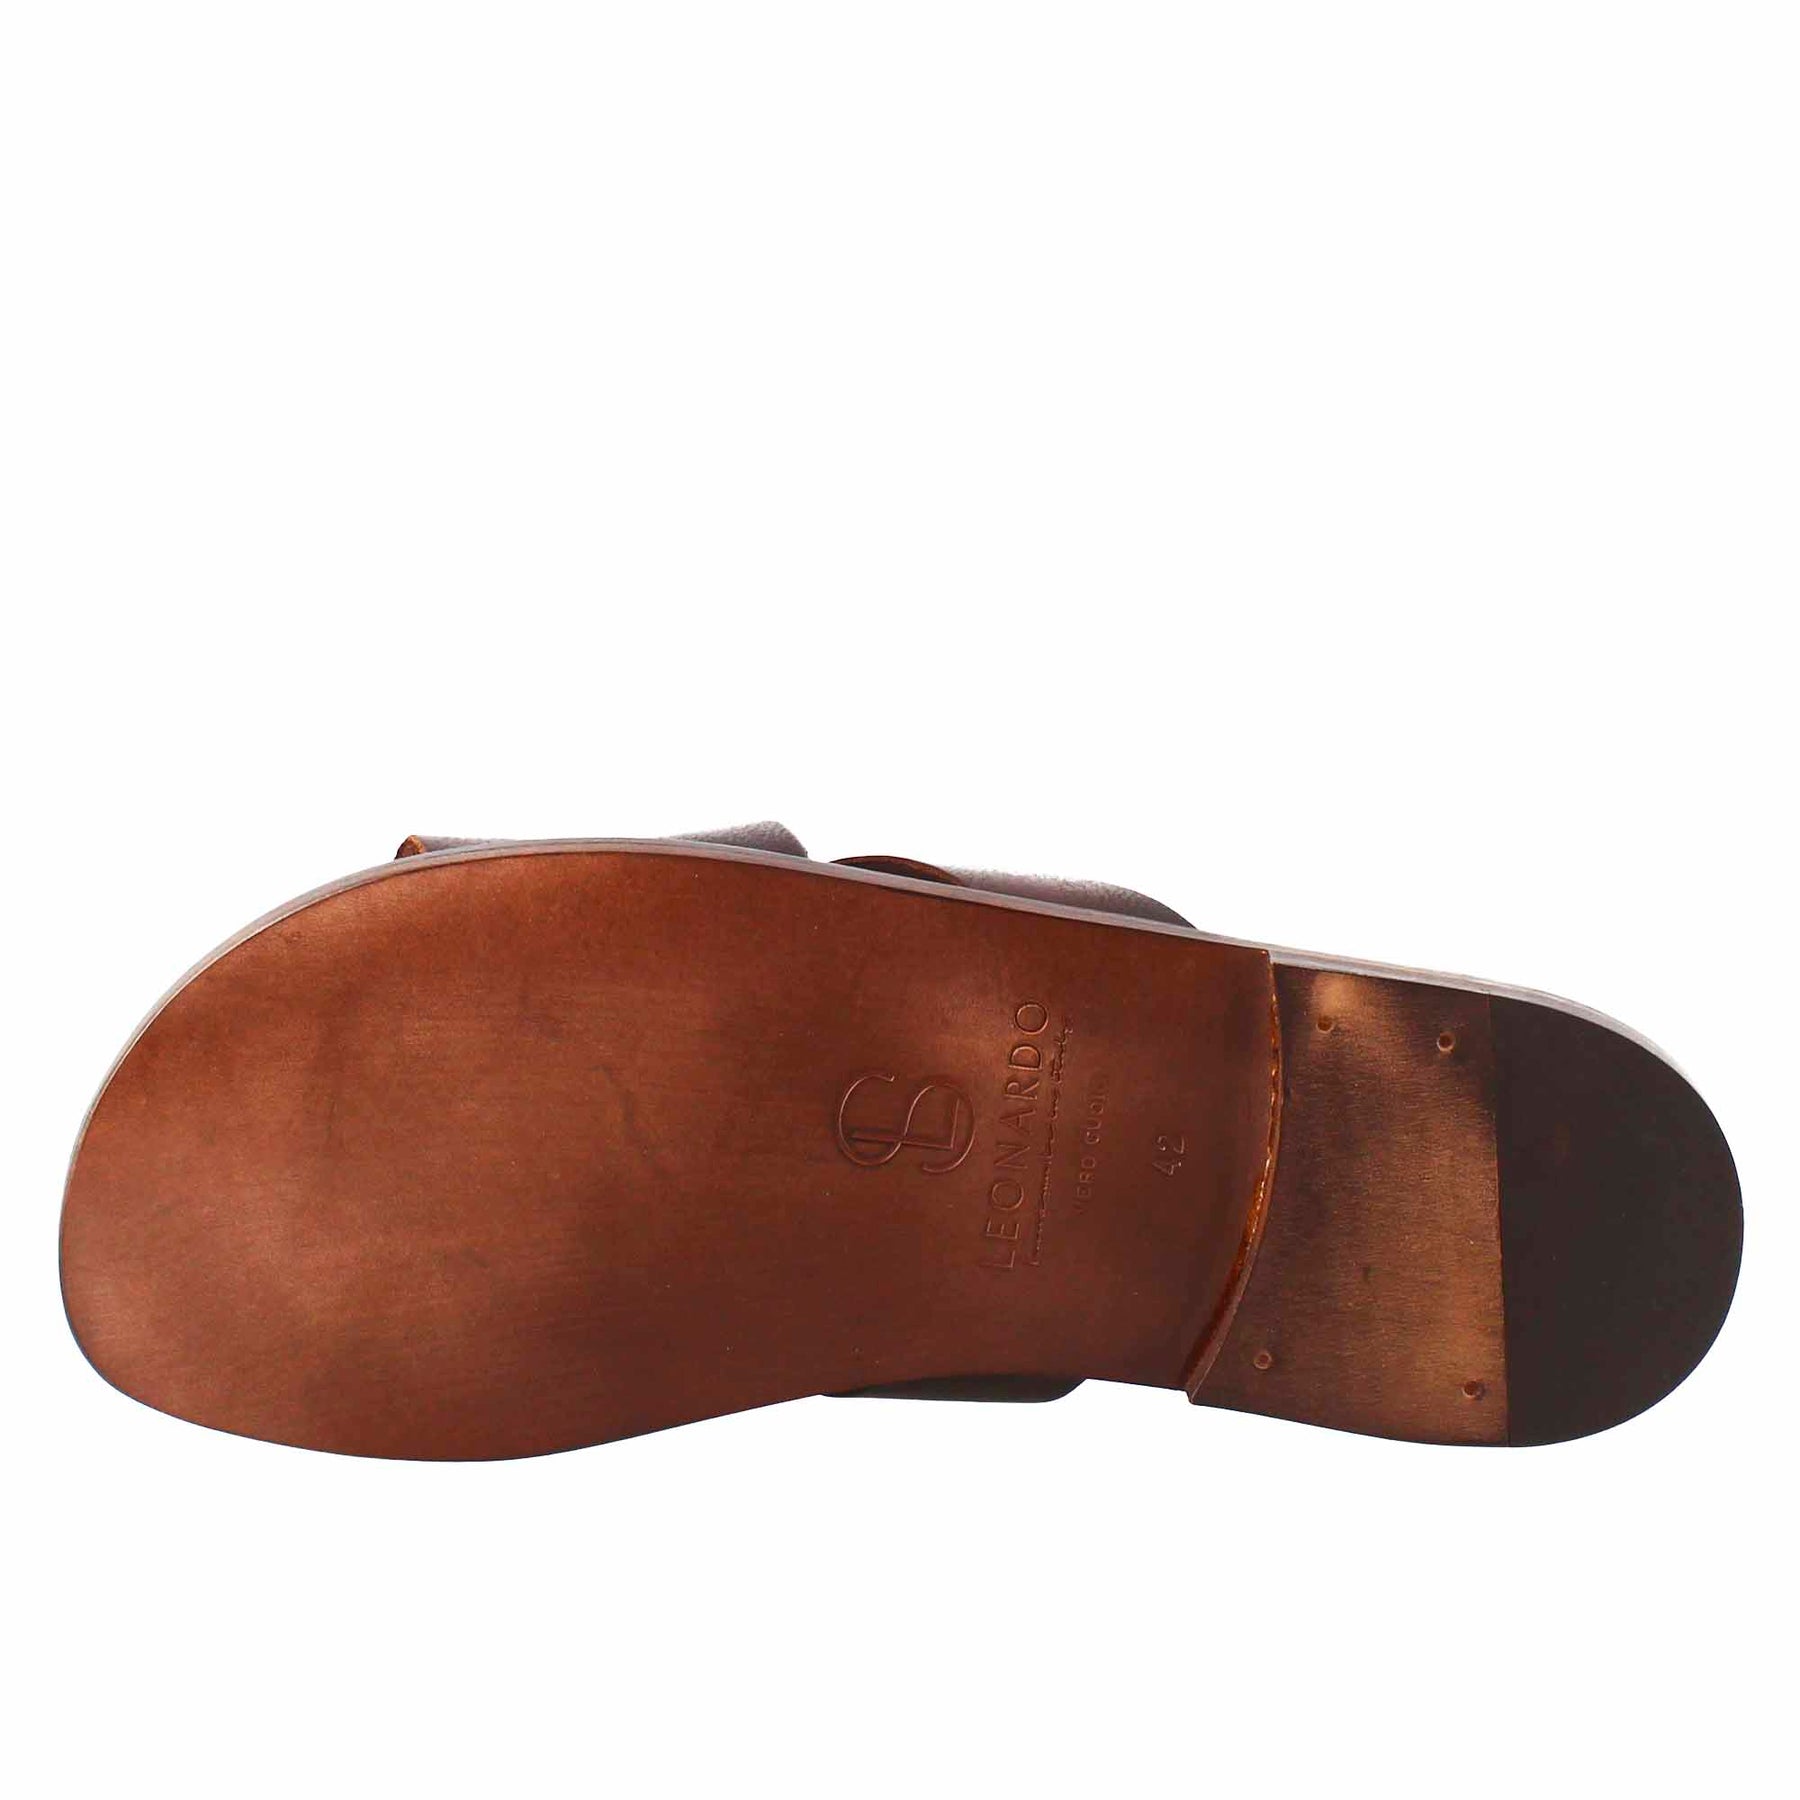 Brown leather gladiator sandals for men